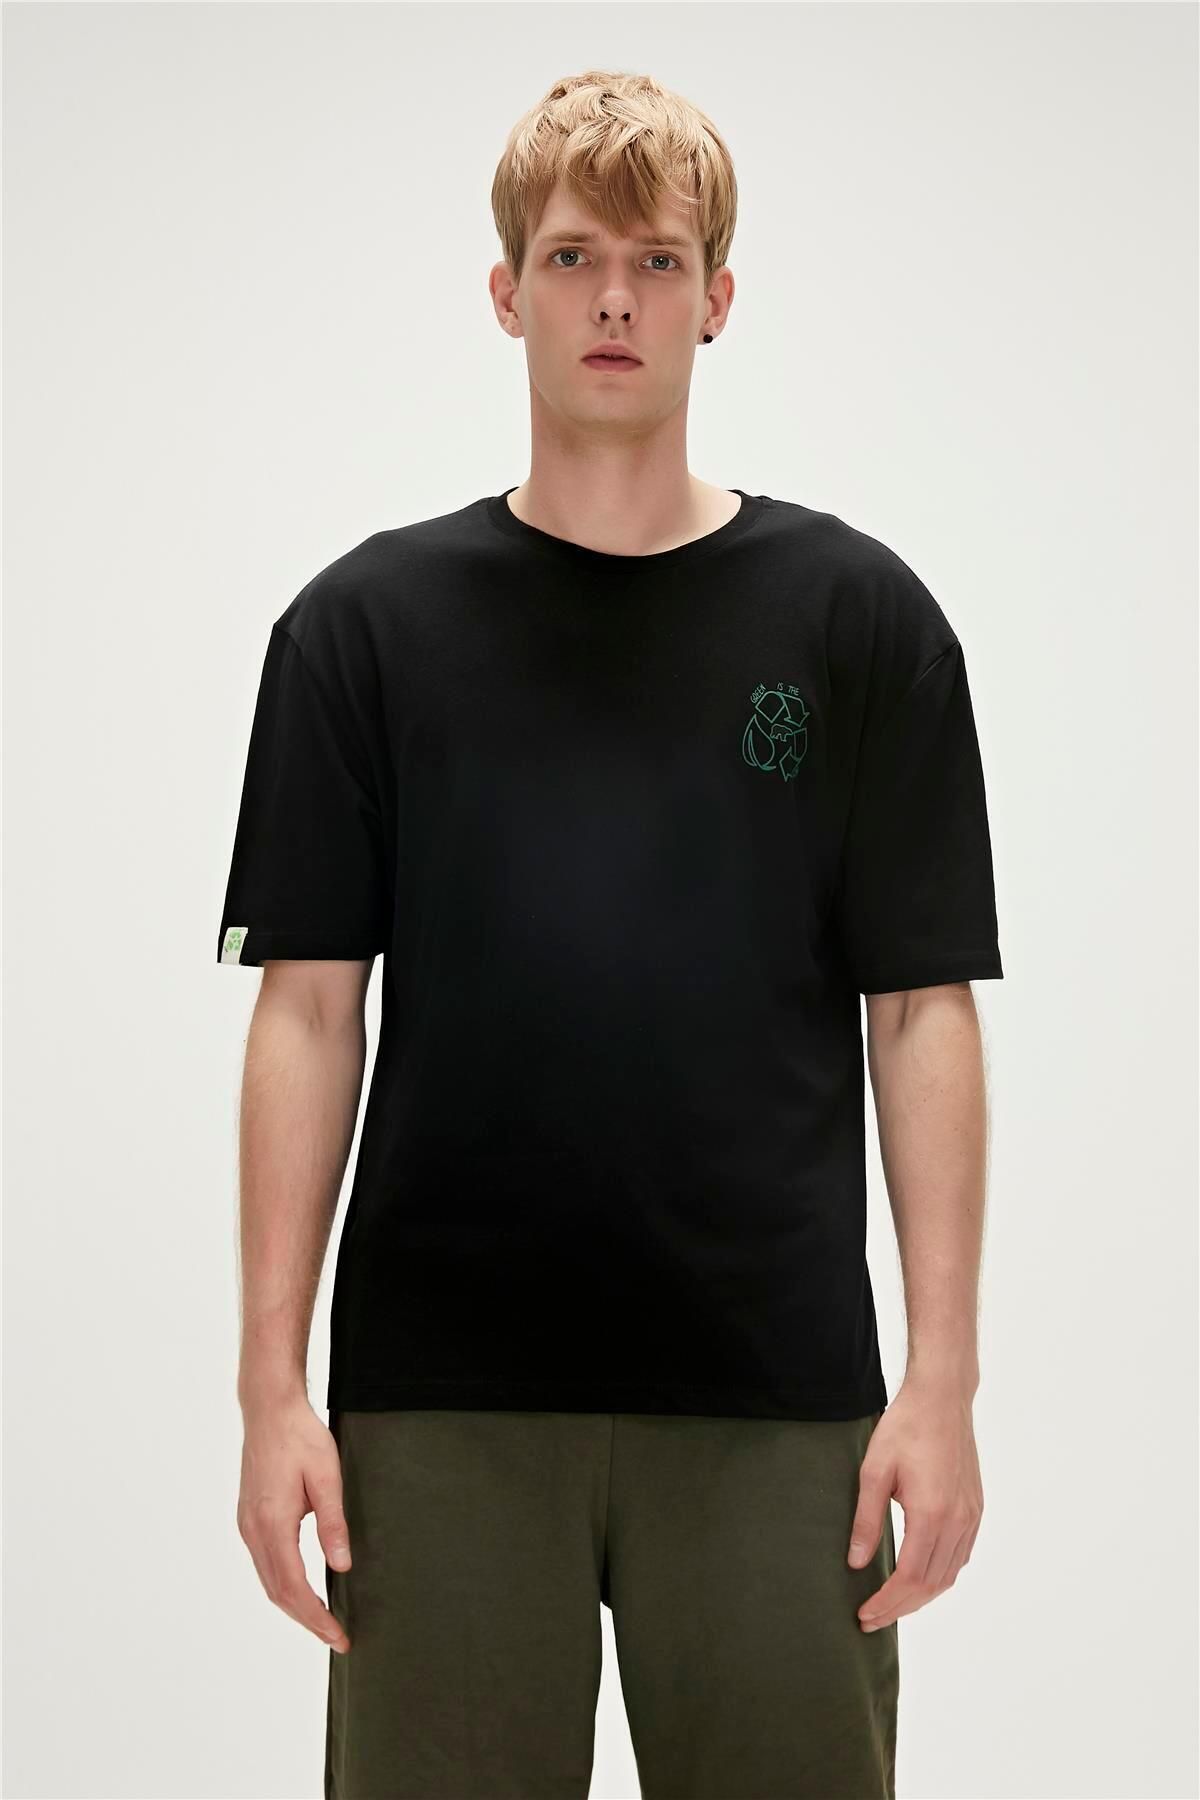 Bad Bear Re-world Recycle Siyah T-shirt Baskılı Erkek Tişört